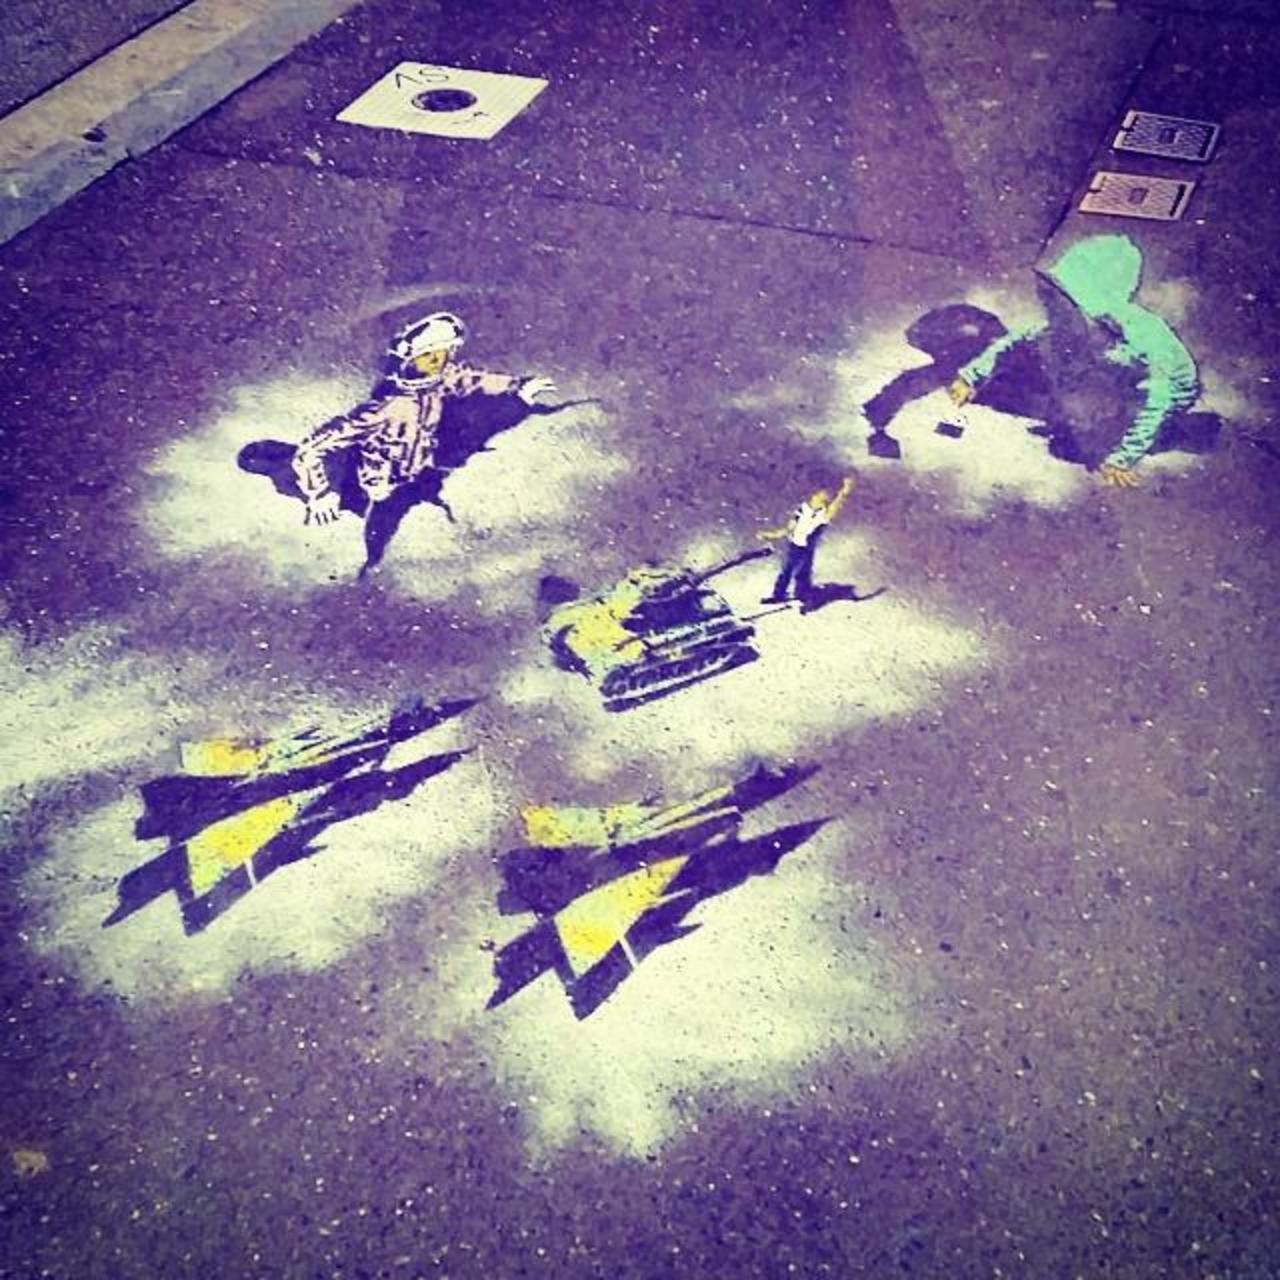 Watch your step #sidewalkart #pavementart #footpathart #streetart #art #graffiti #lanewayart #spraypaint #rsa_graff… http://t.co/16N5M4whwT